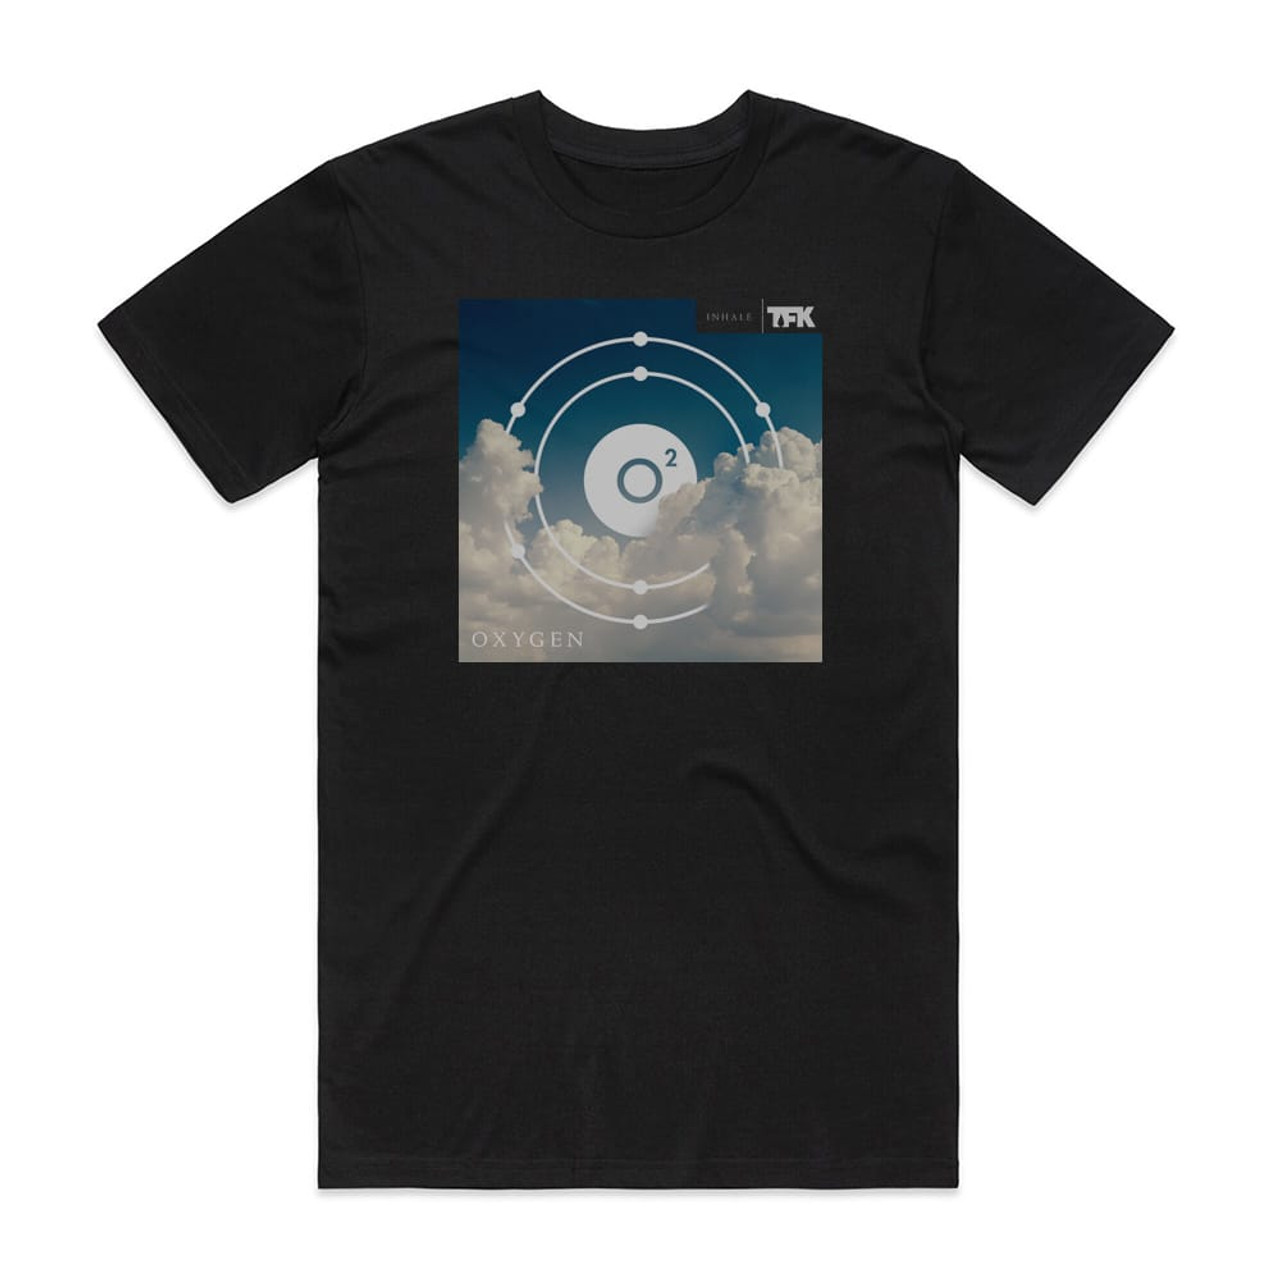 Thousand Foot Krutch Oxygen Inhale Album Cover T-Shirt Black